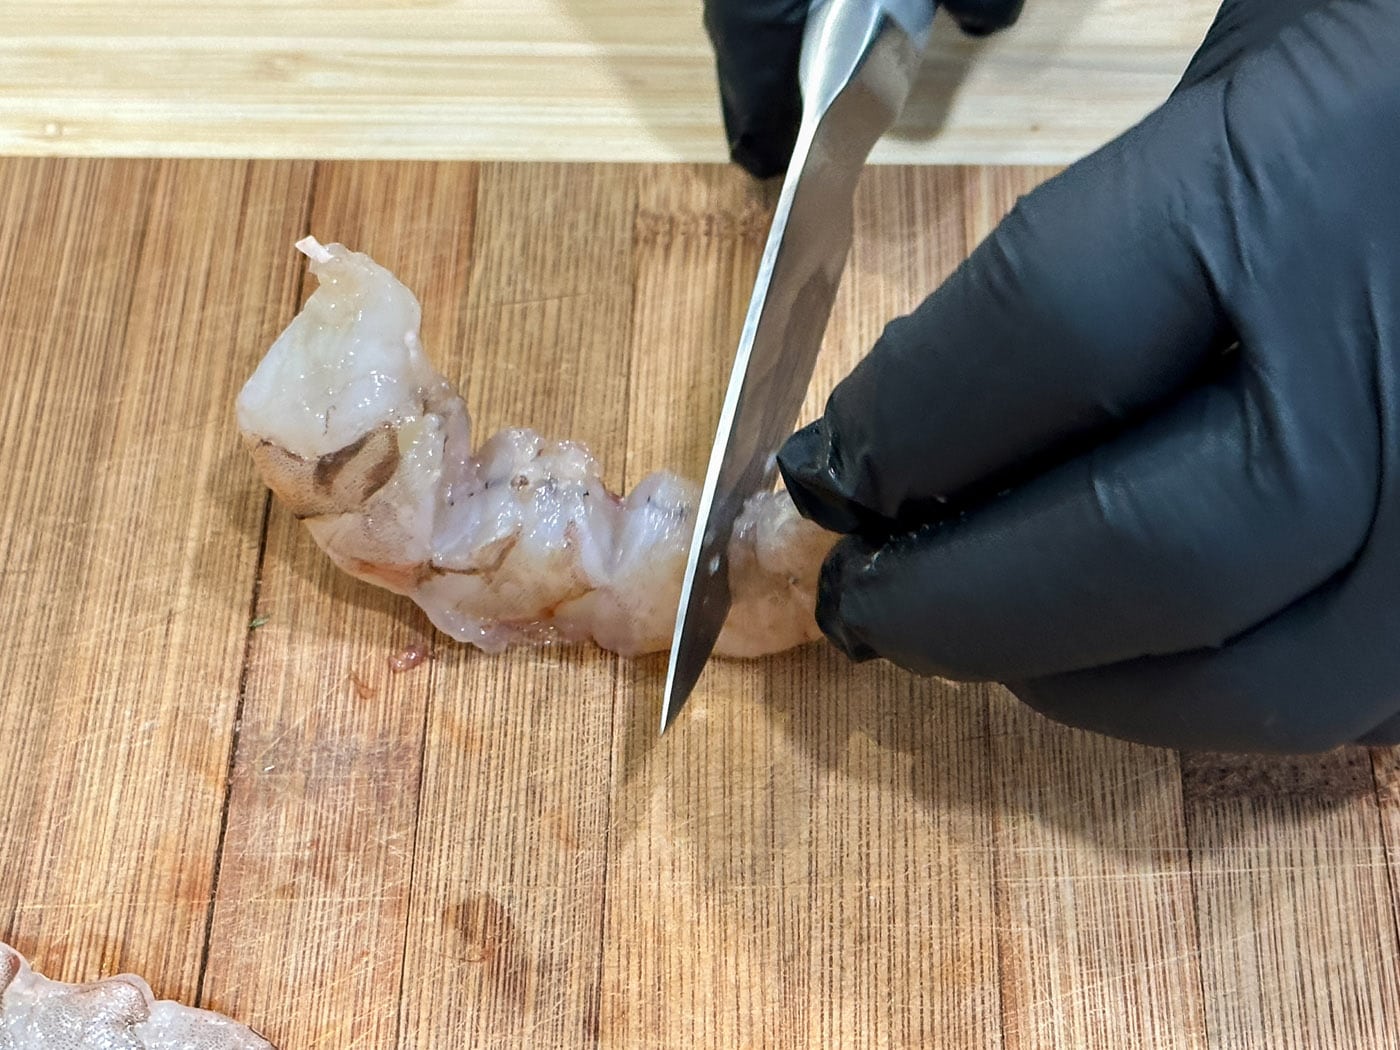 scoring shrimp with a knife